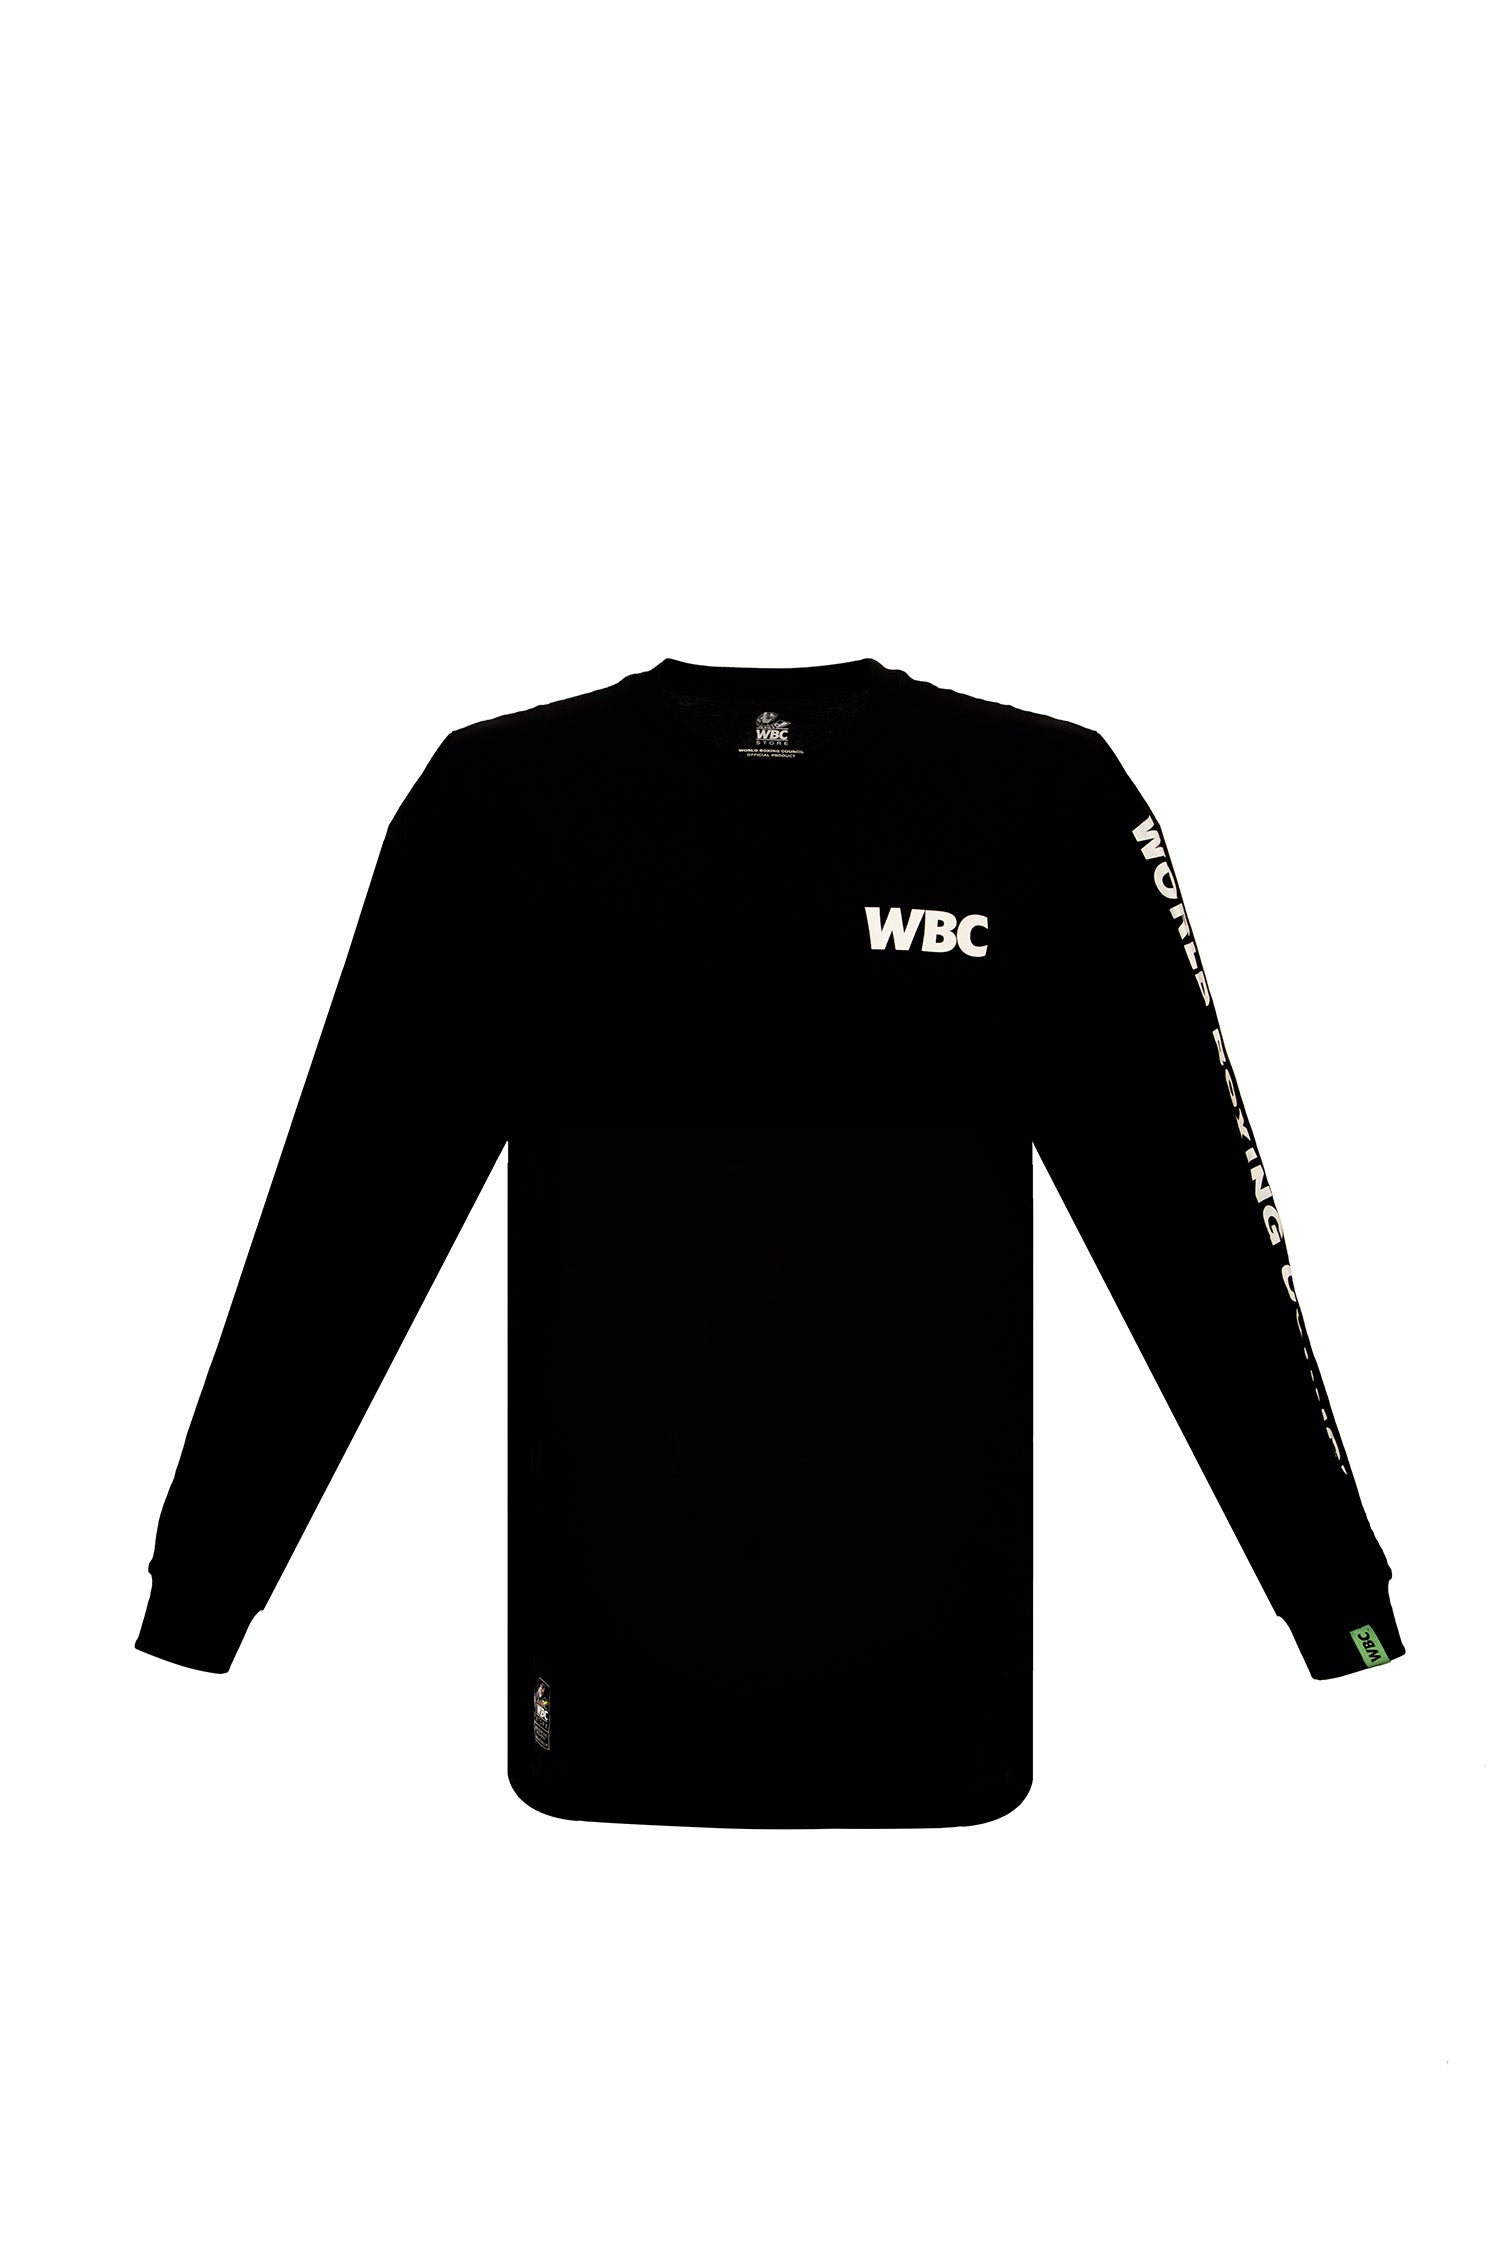 WBC - Global Boxing Long Sleeve T-Shirt